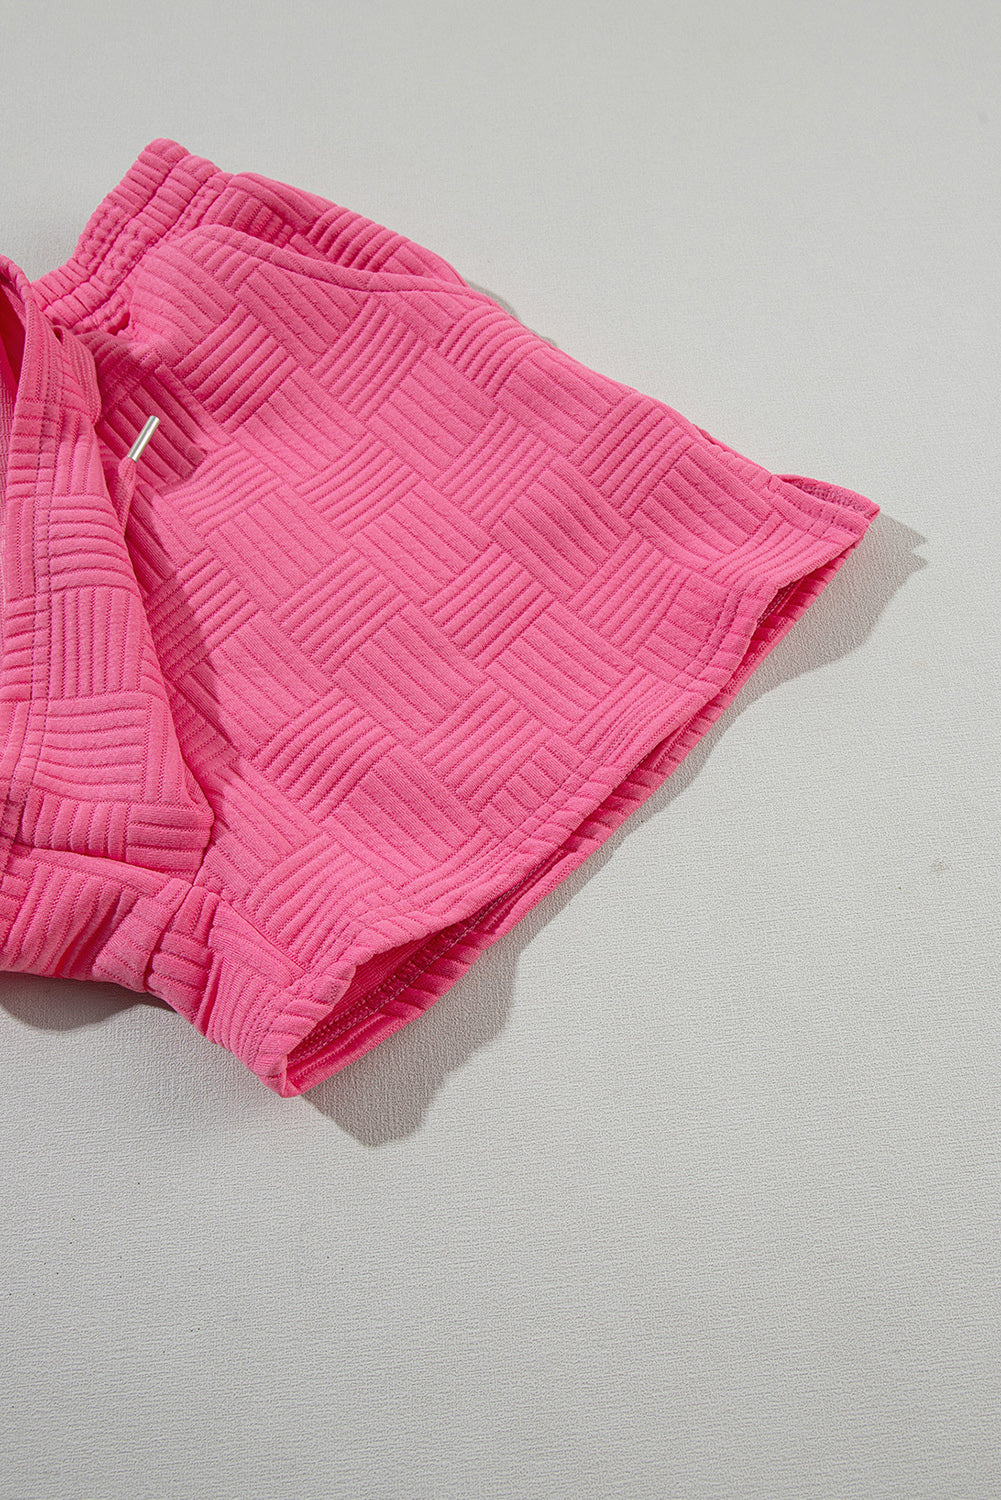 Bonbon Textured Ruffled Sleeve Tee and Drawstring Shorts Set